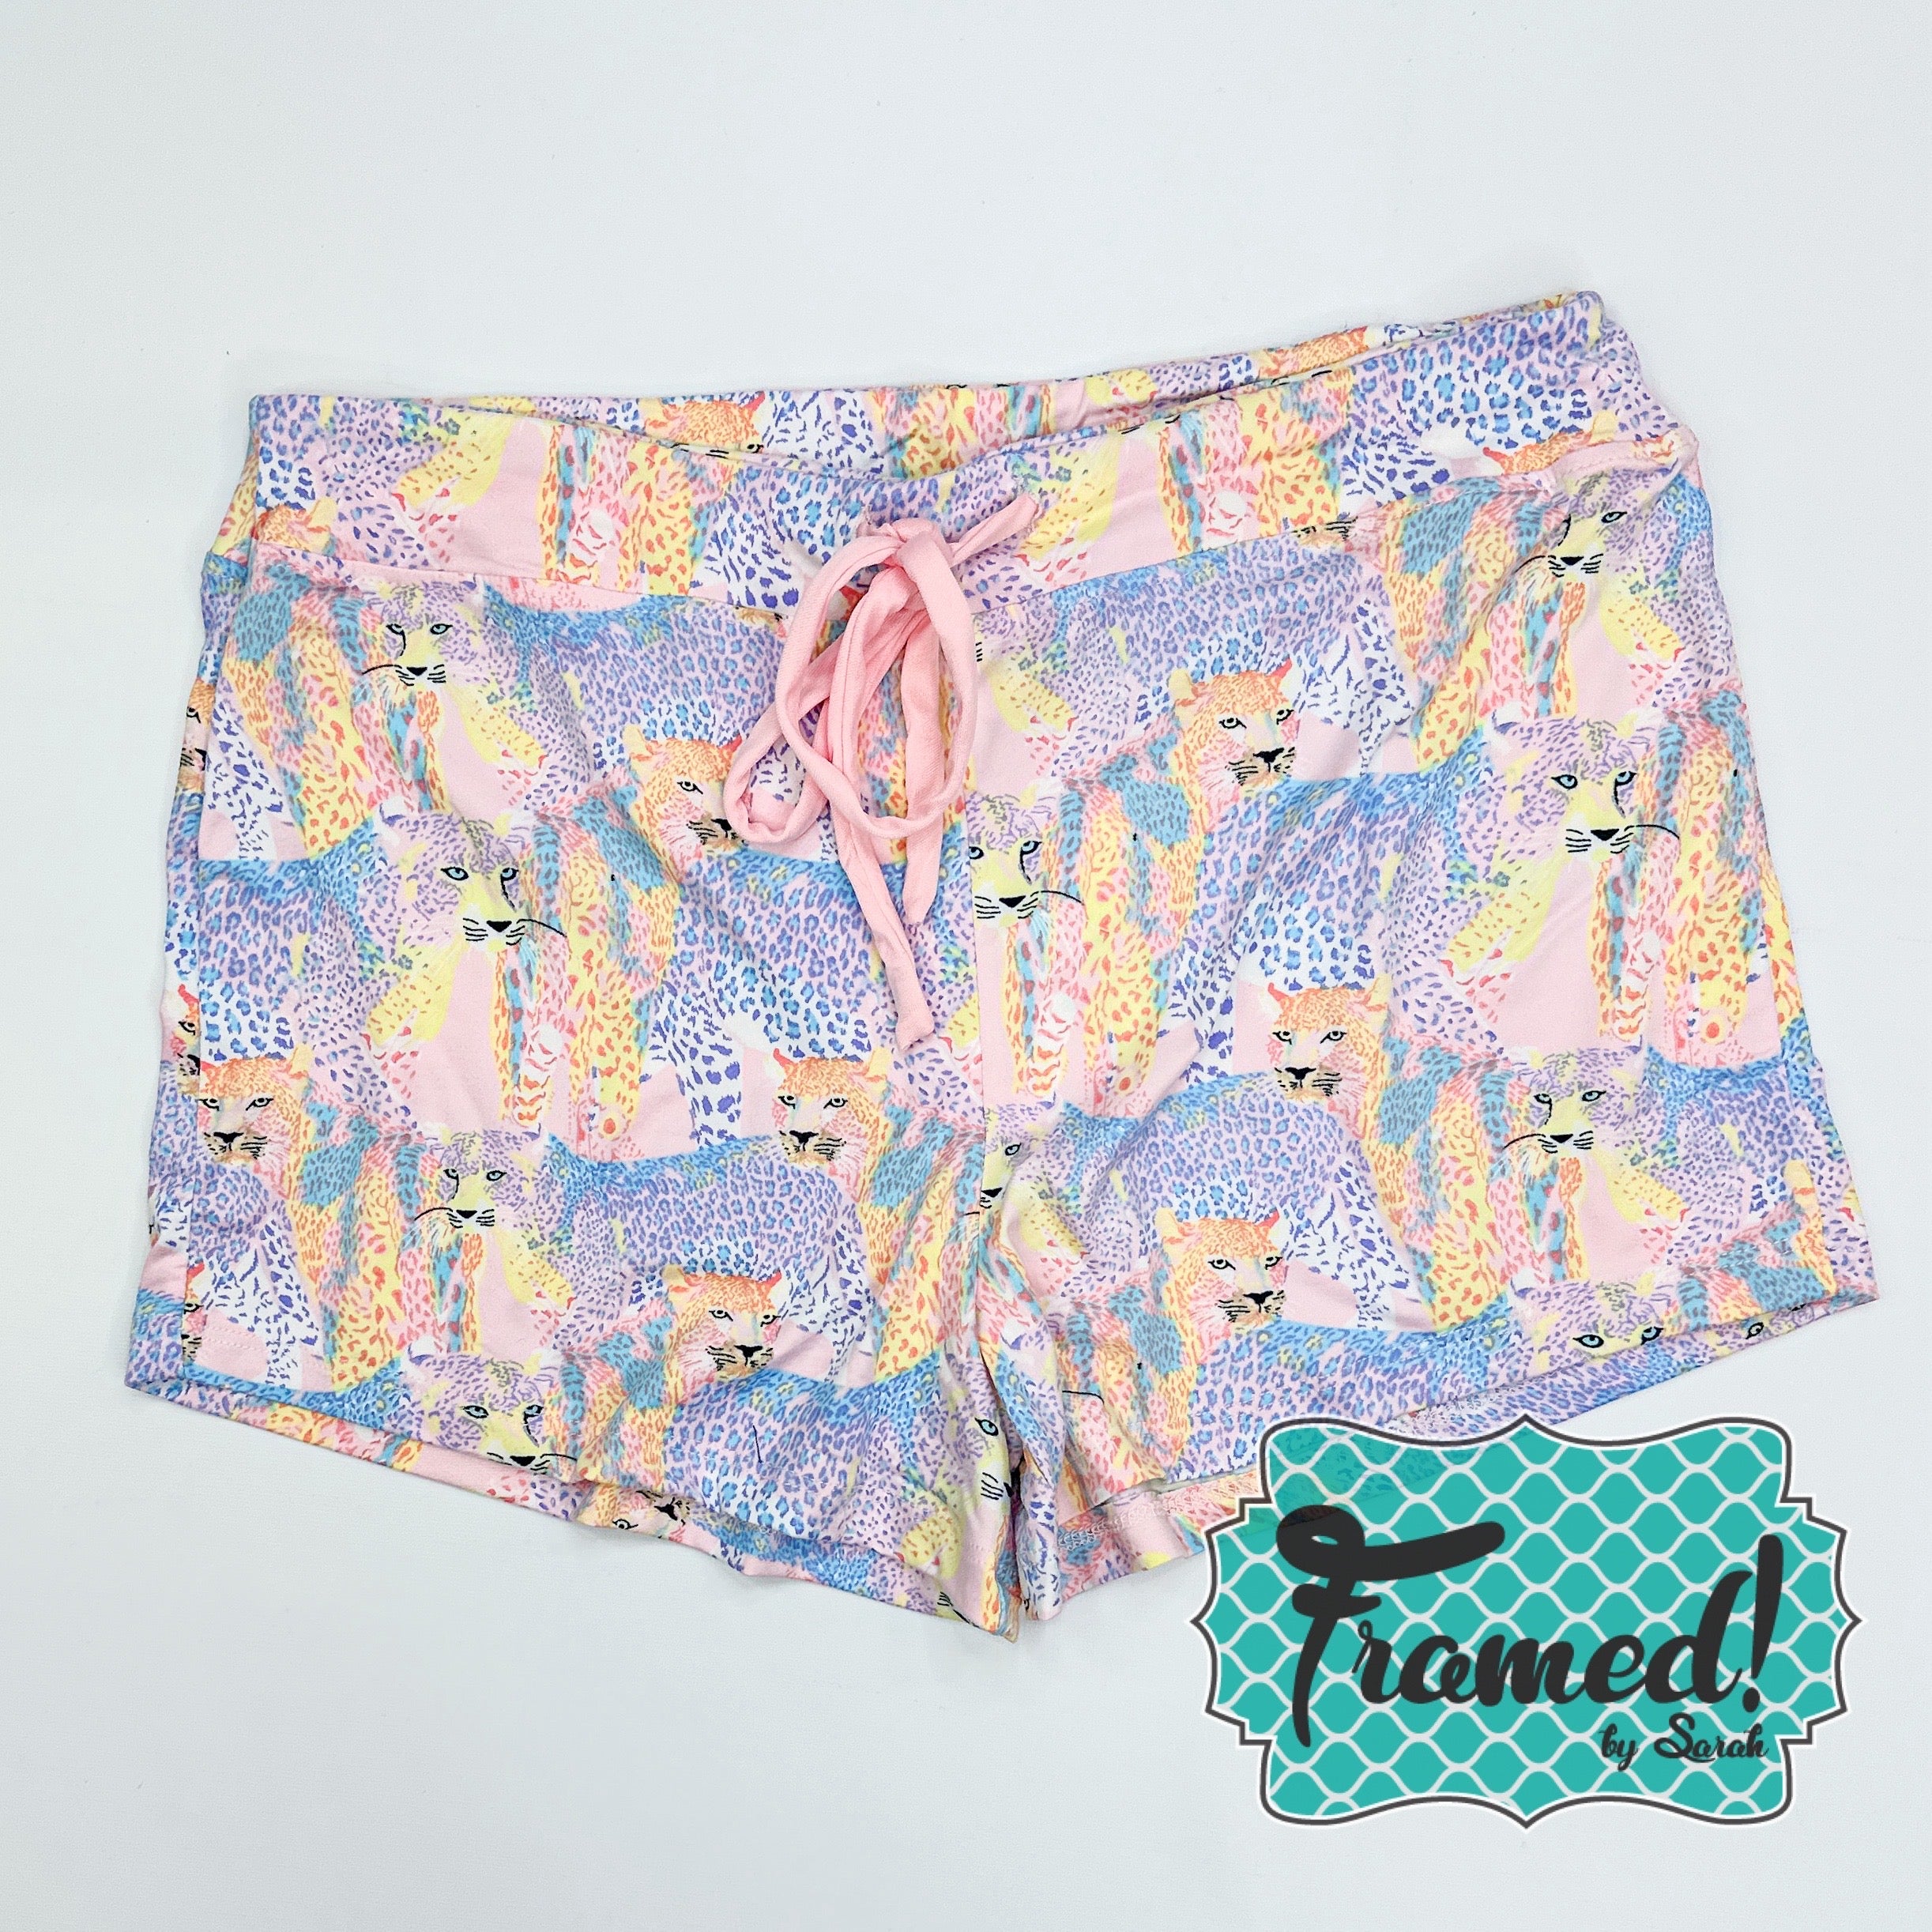 Pastel Cheetah Pajama Shorts